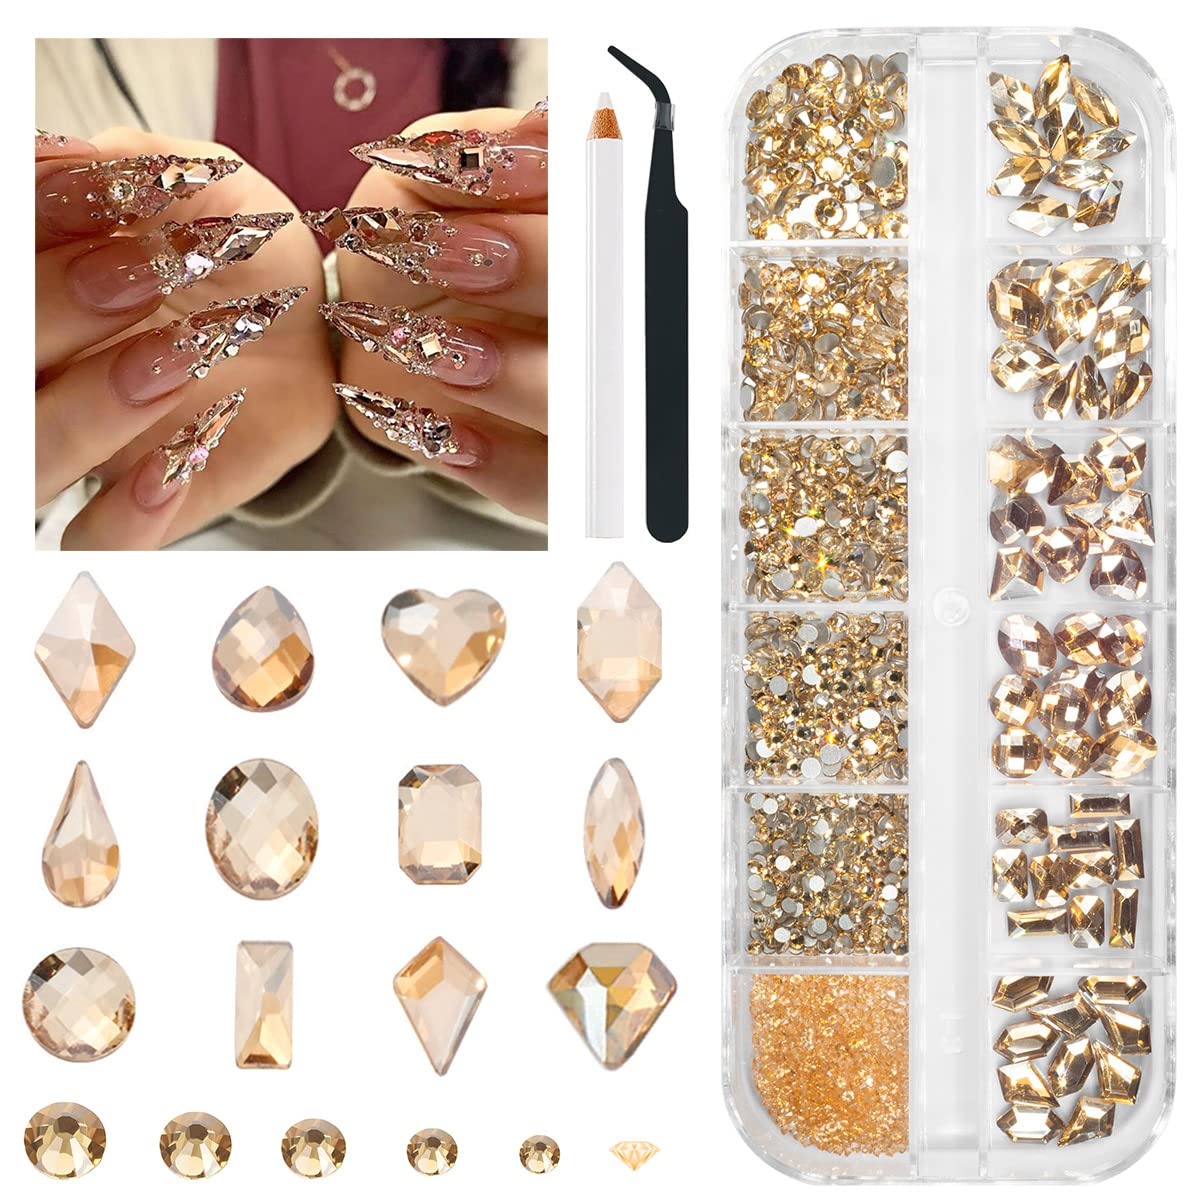 1300Pcs Champagne Gold Nail Art Rhinestones Kit 60 Multi Shapes Crystal Flatback golden Rhinestones Gems +1240 Round Beads Glass Stones Diamonds jewels w Tweezer & Wax Pen for Faces Eyes Makeup Crafts